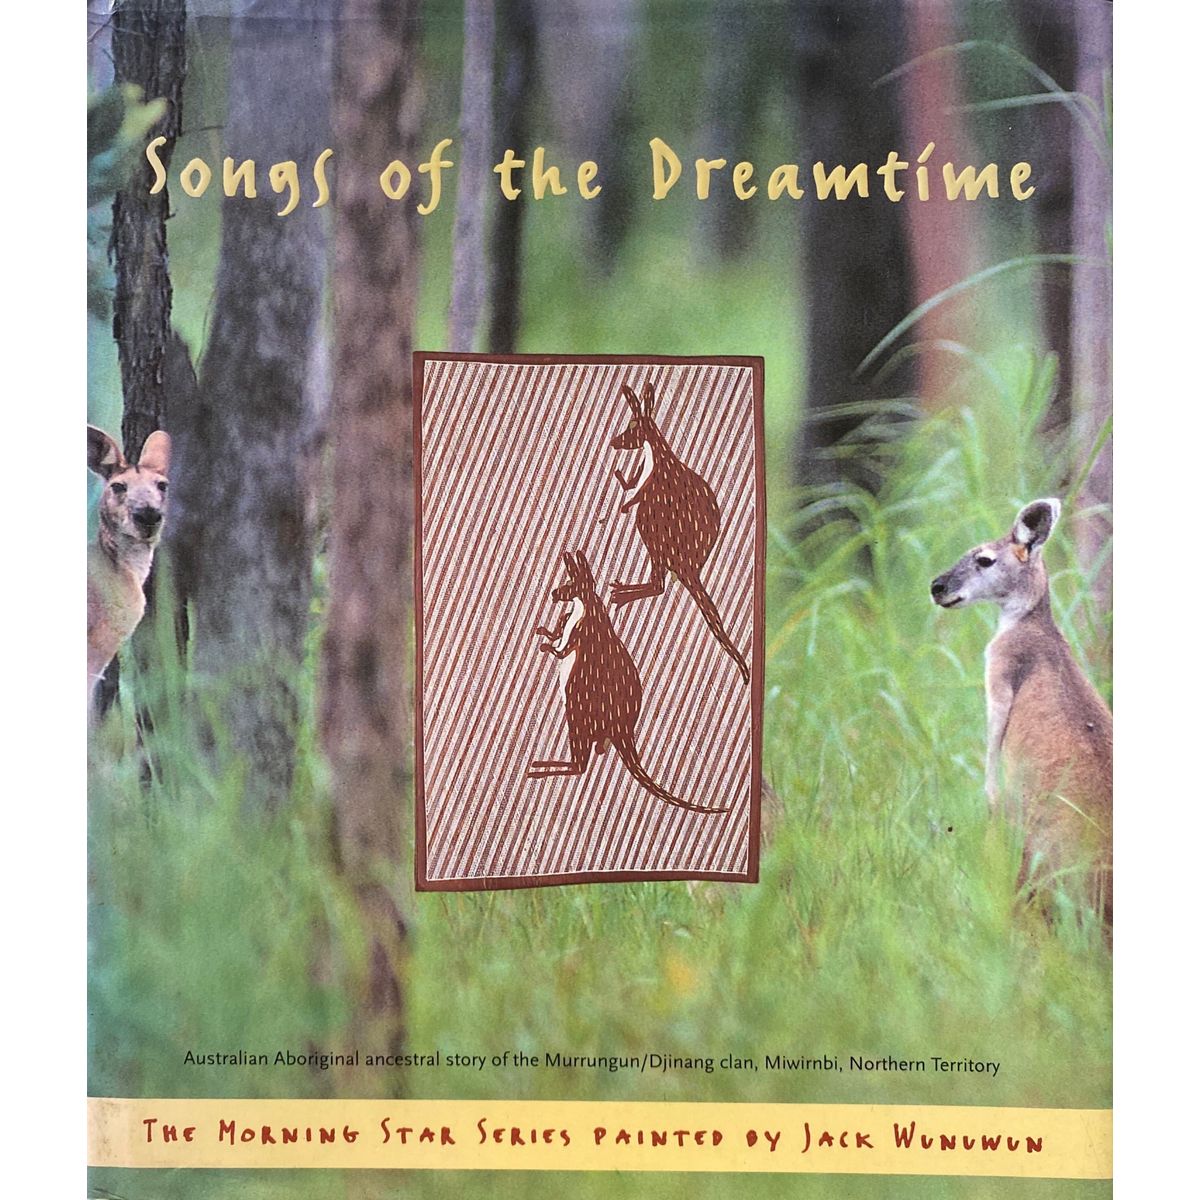 ISBN: 9781875634064 / 1875634061 - Songs of The Dreamtime by Terry Gandadila [1995]